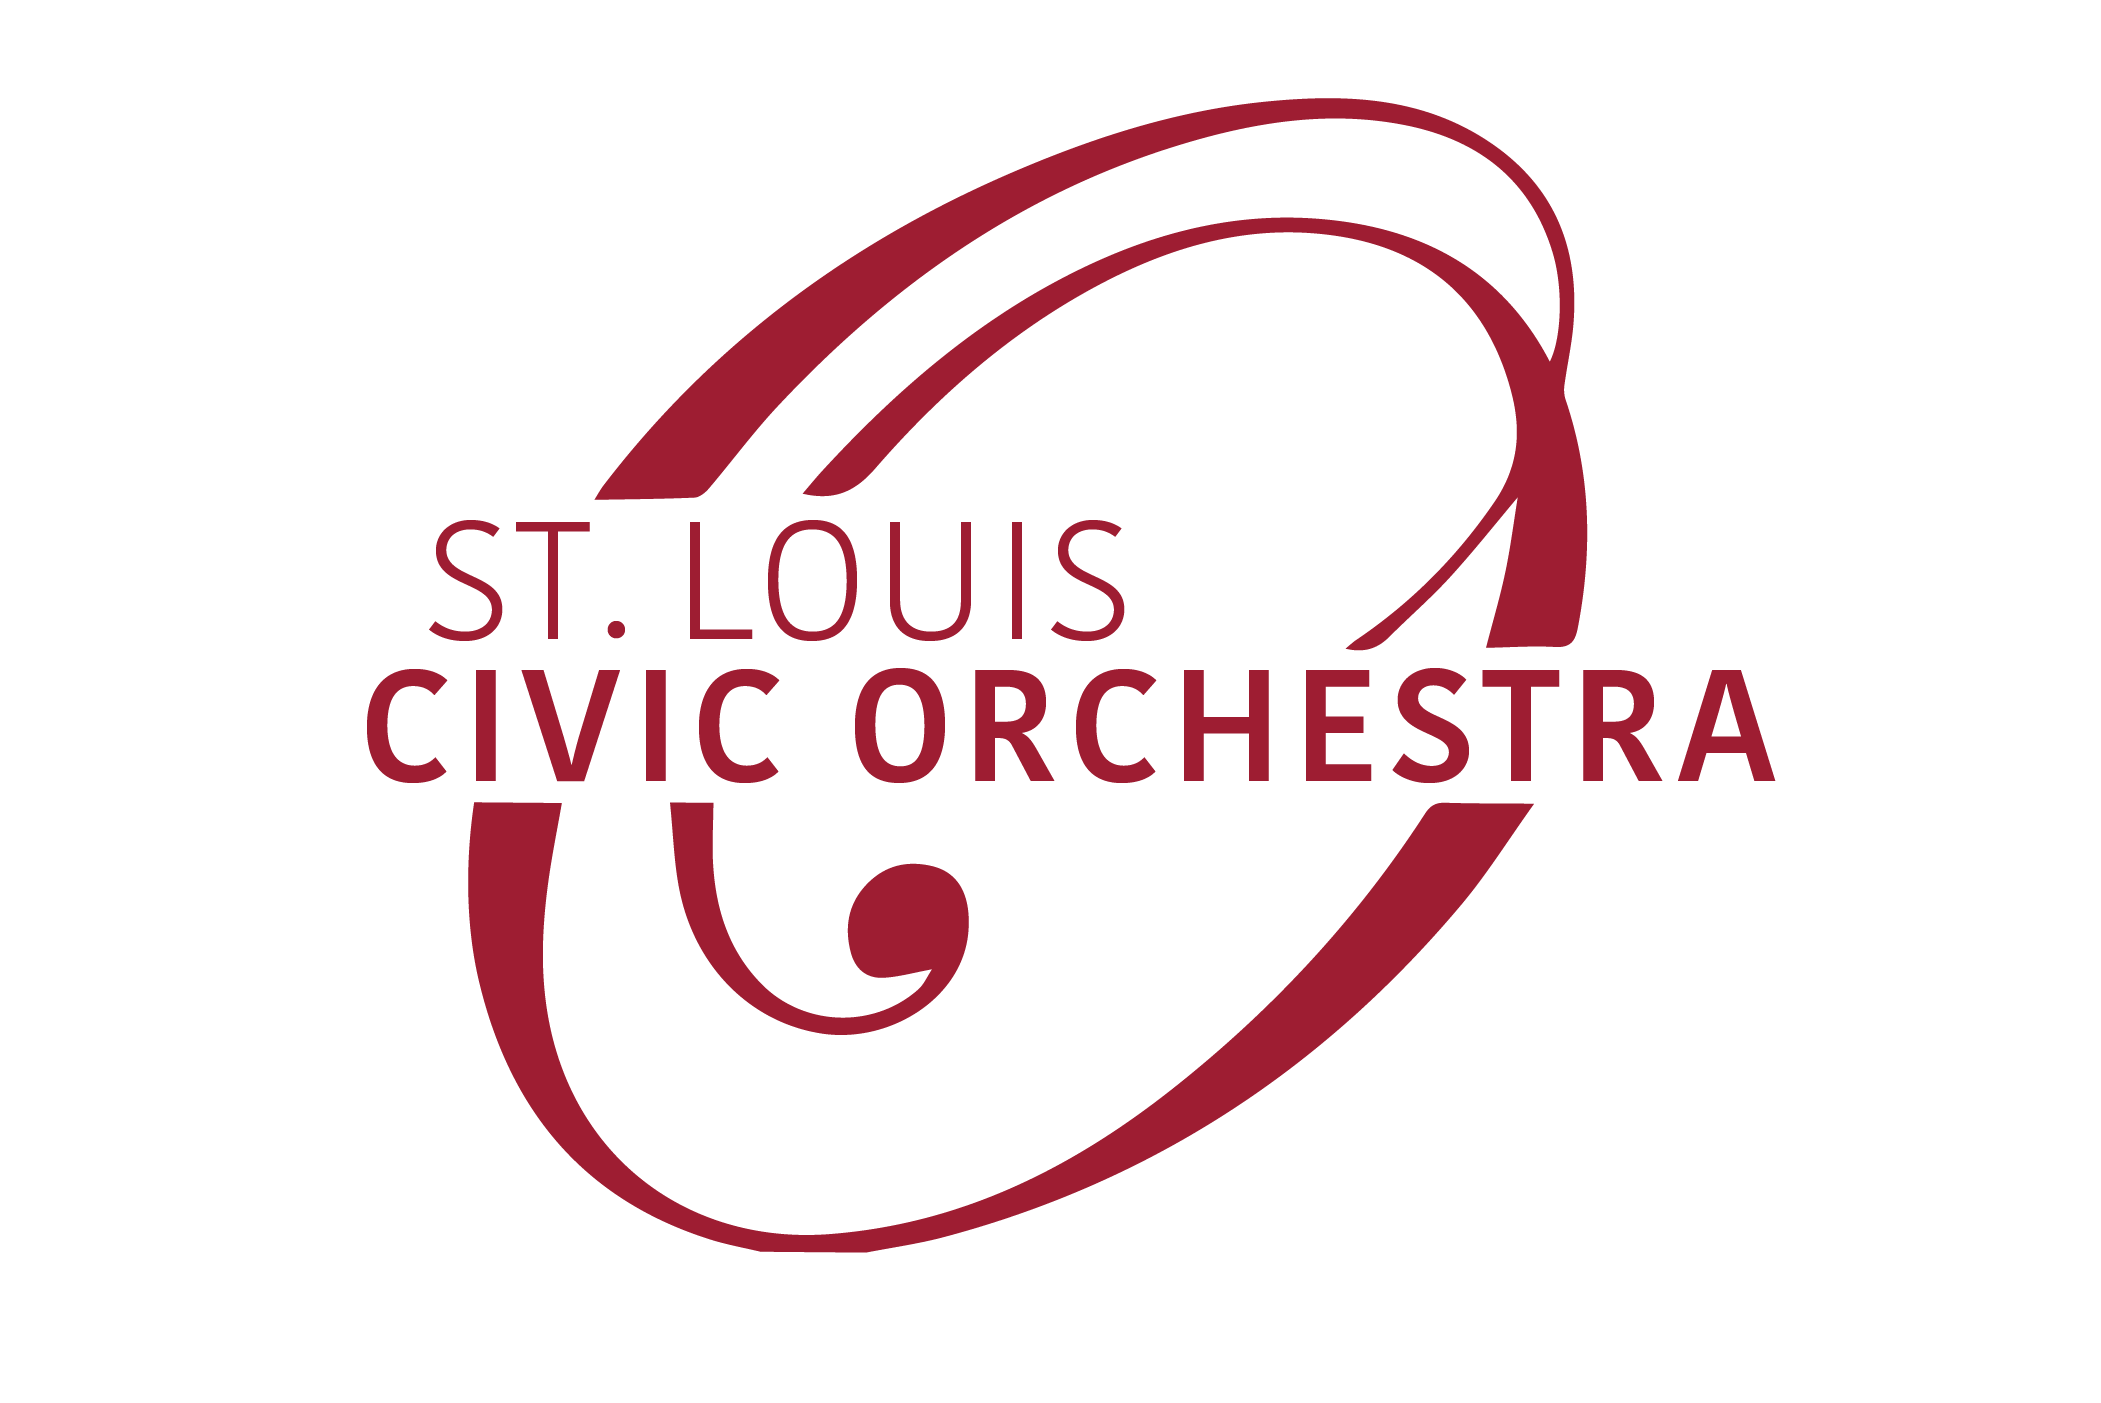 St. Louis Civic Orchestra